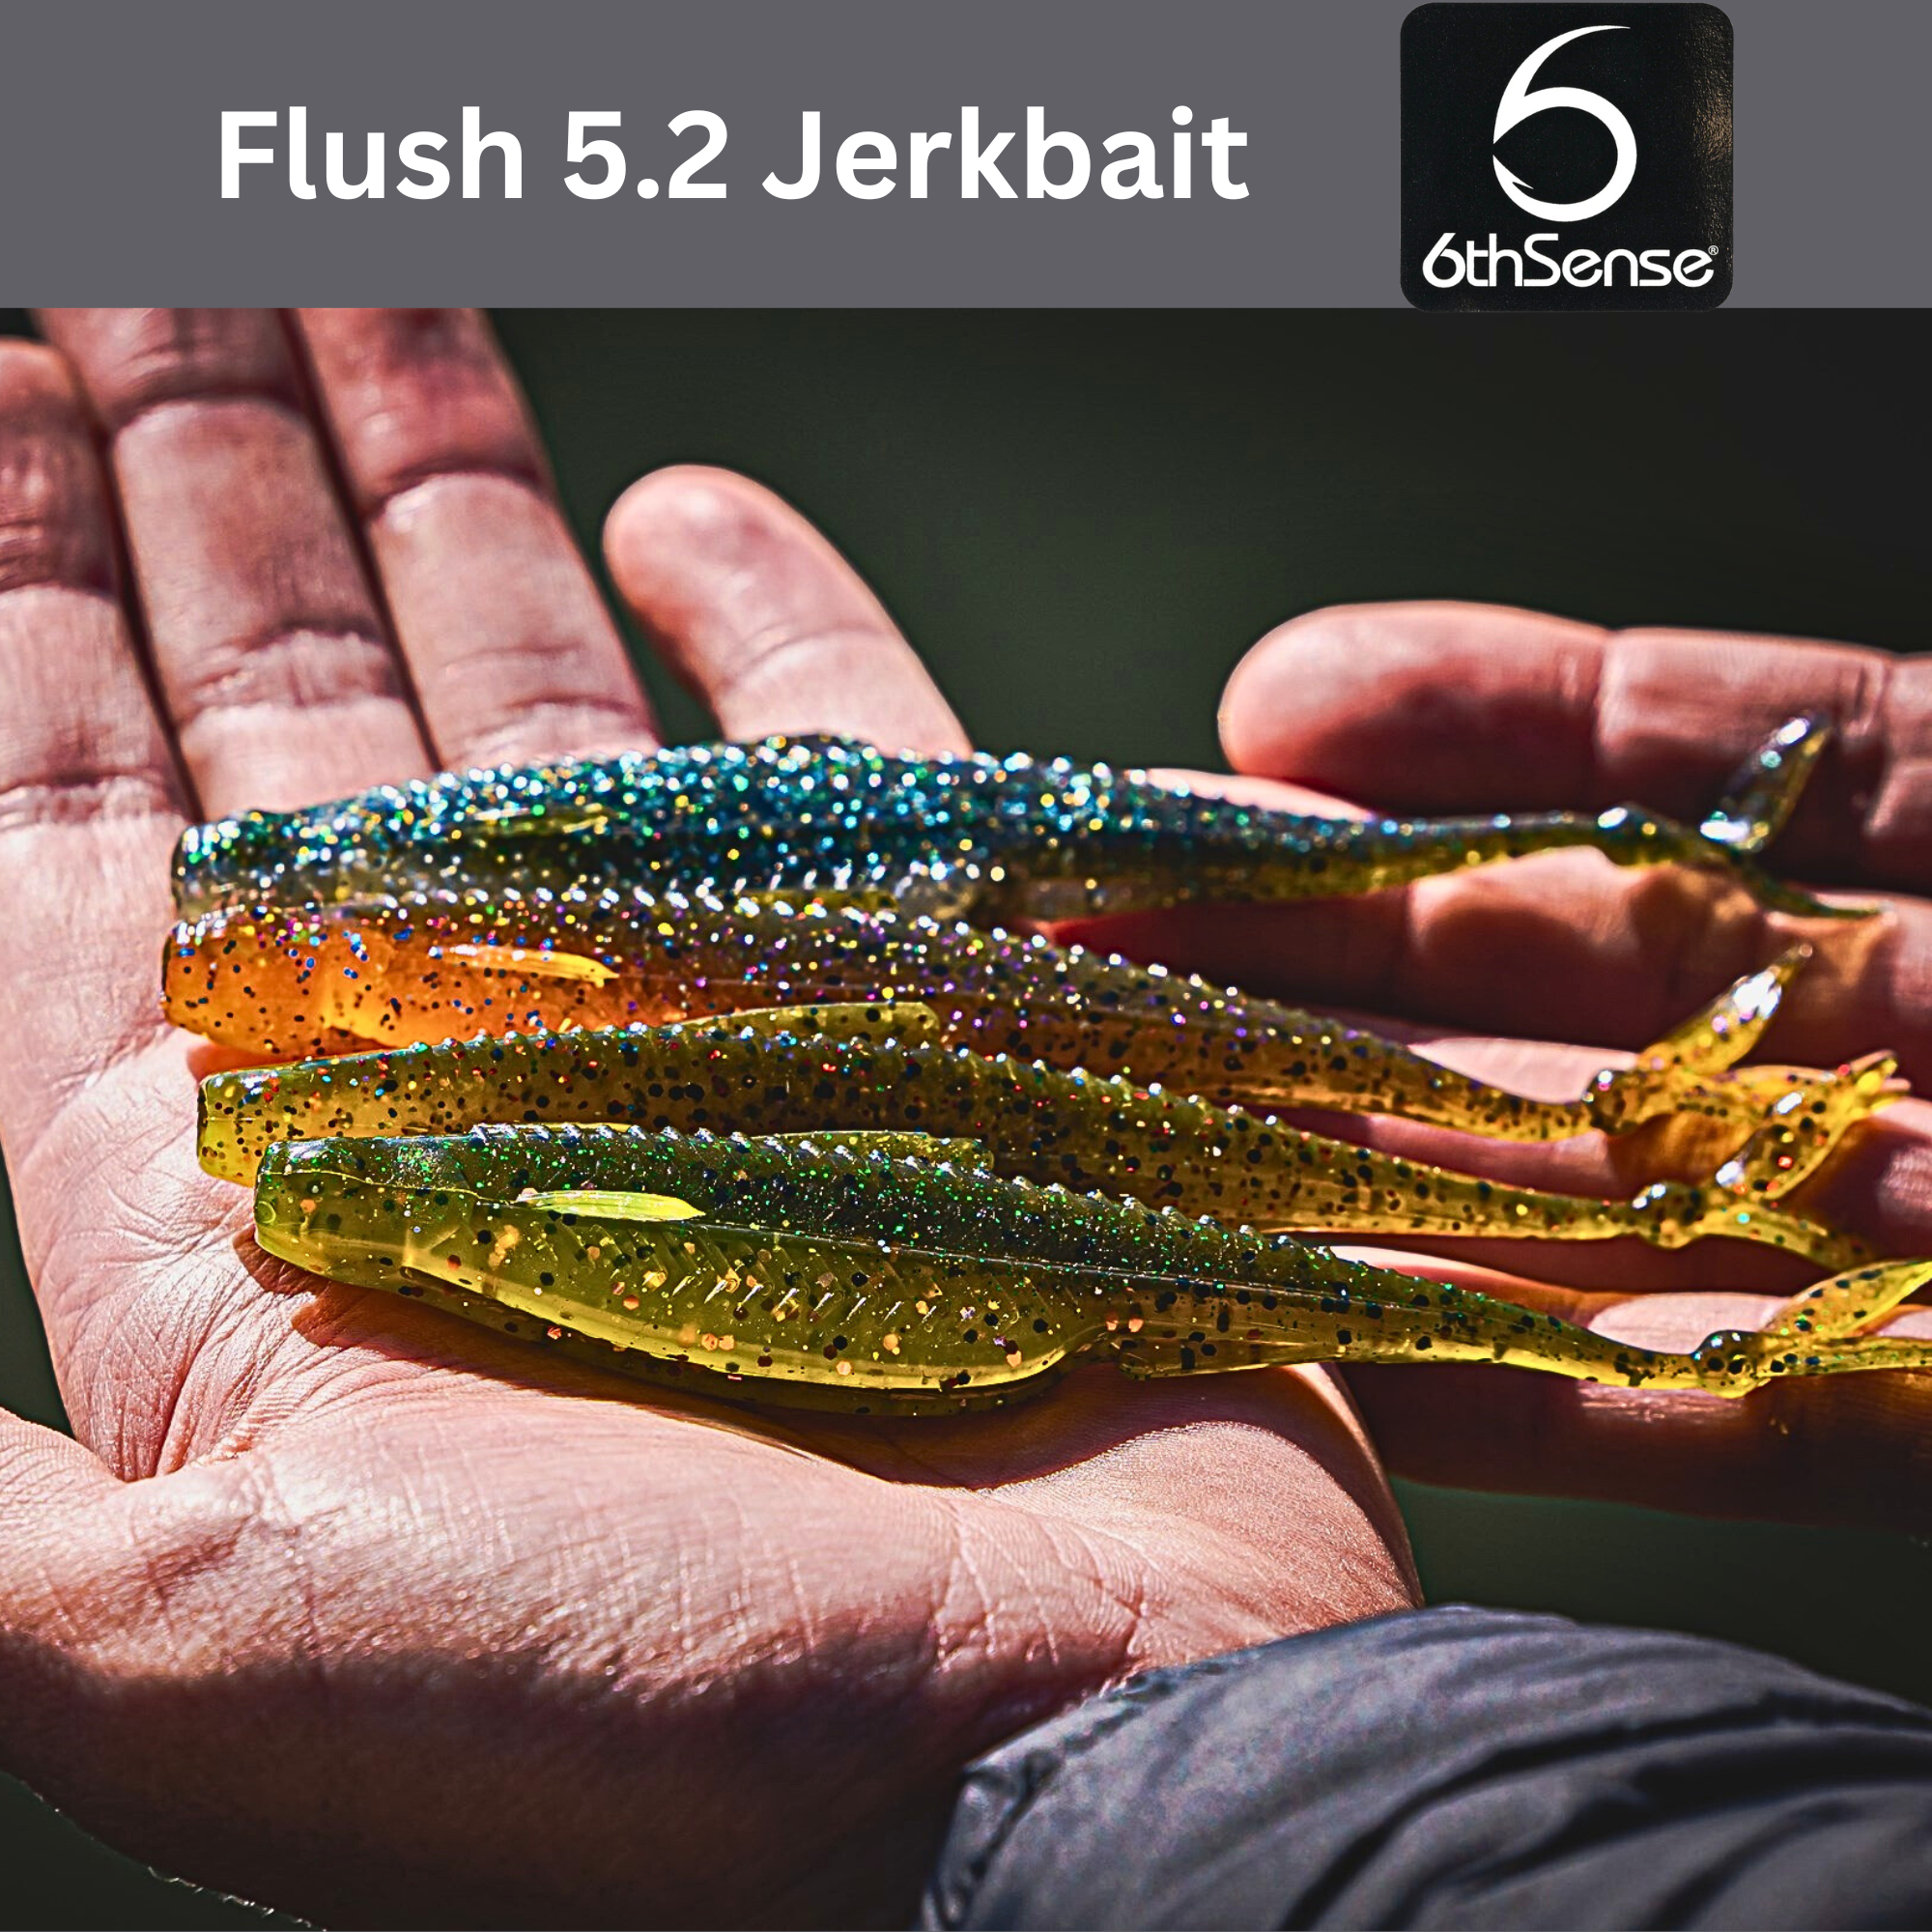 Flush 5.2 Jerkbait, 6th Sense Fishing, Lures